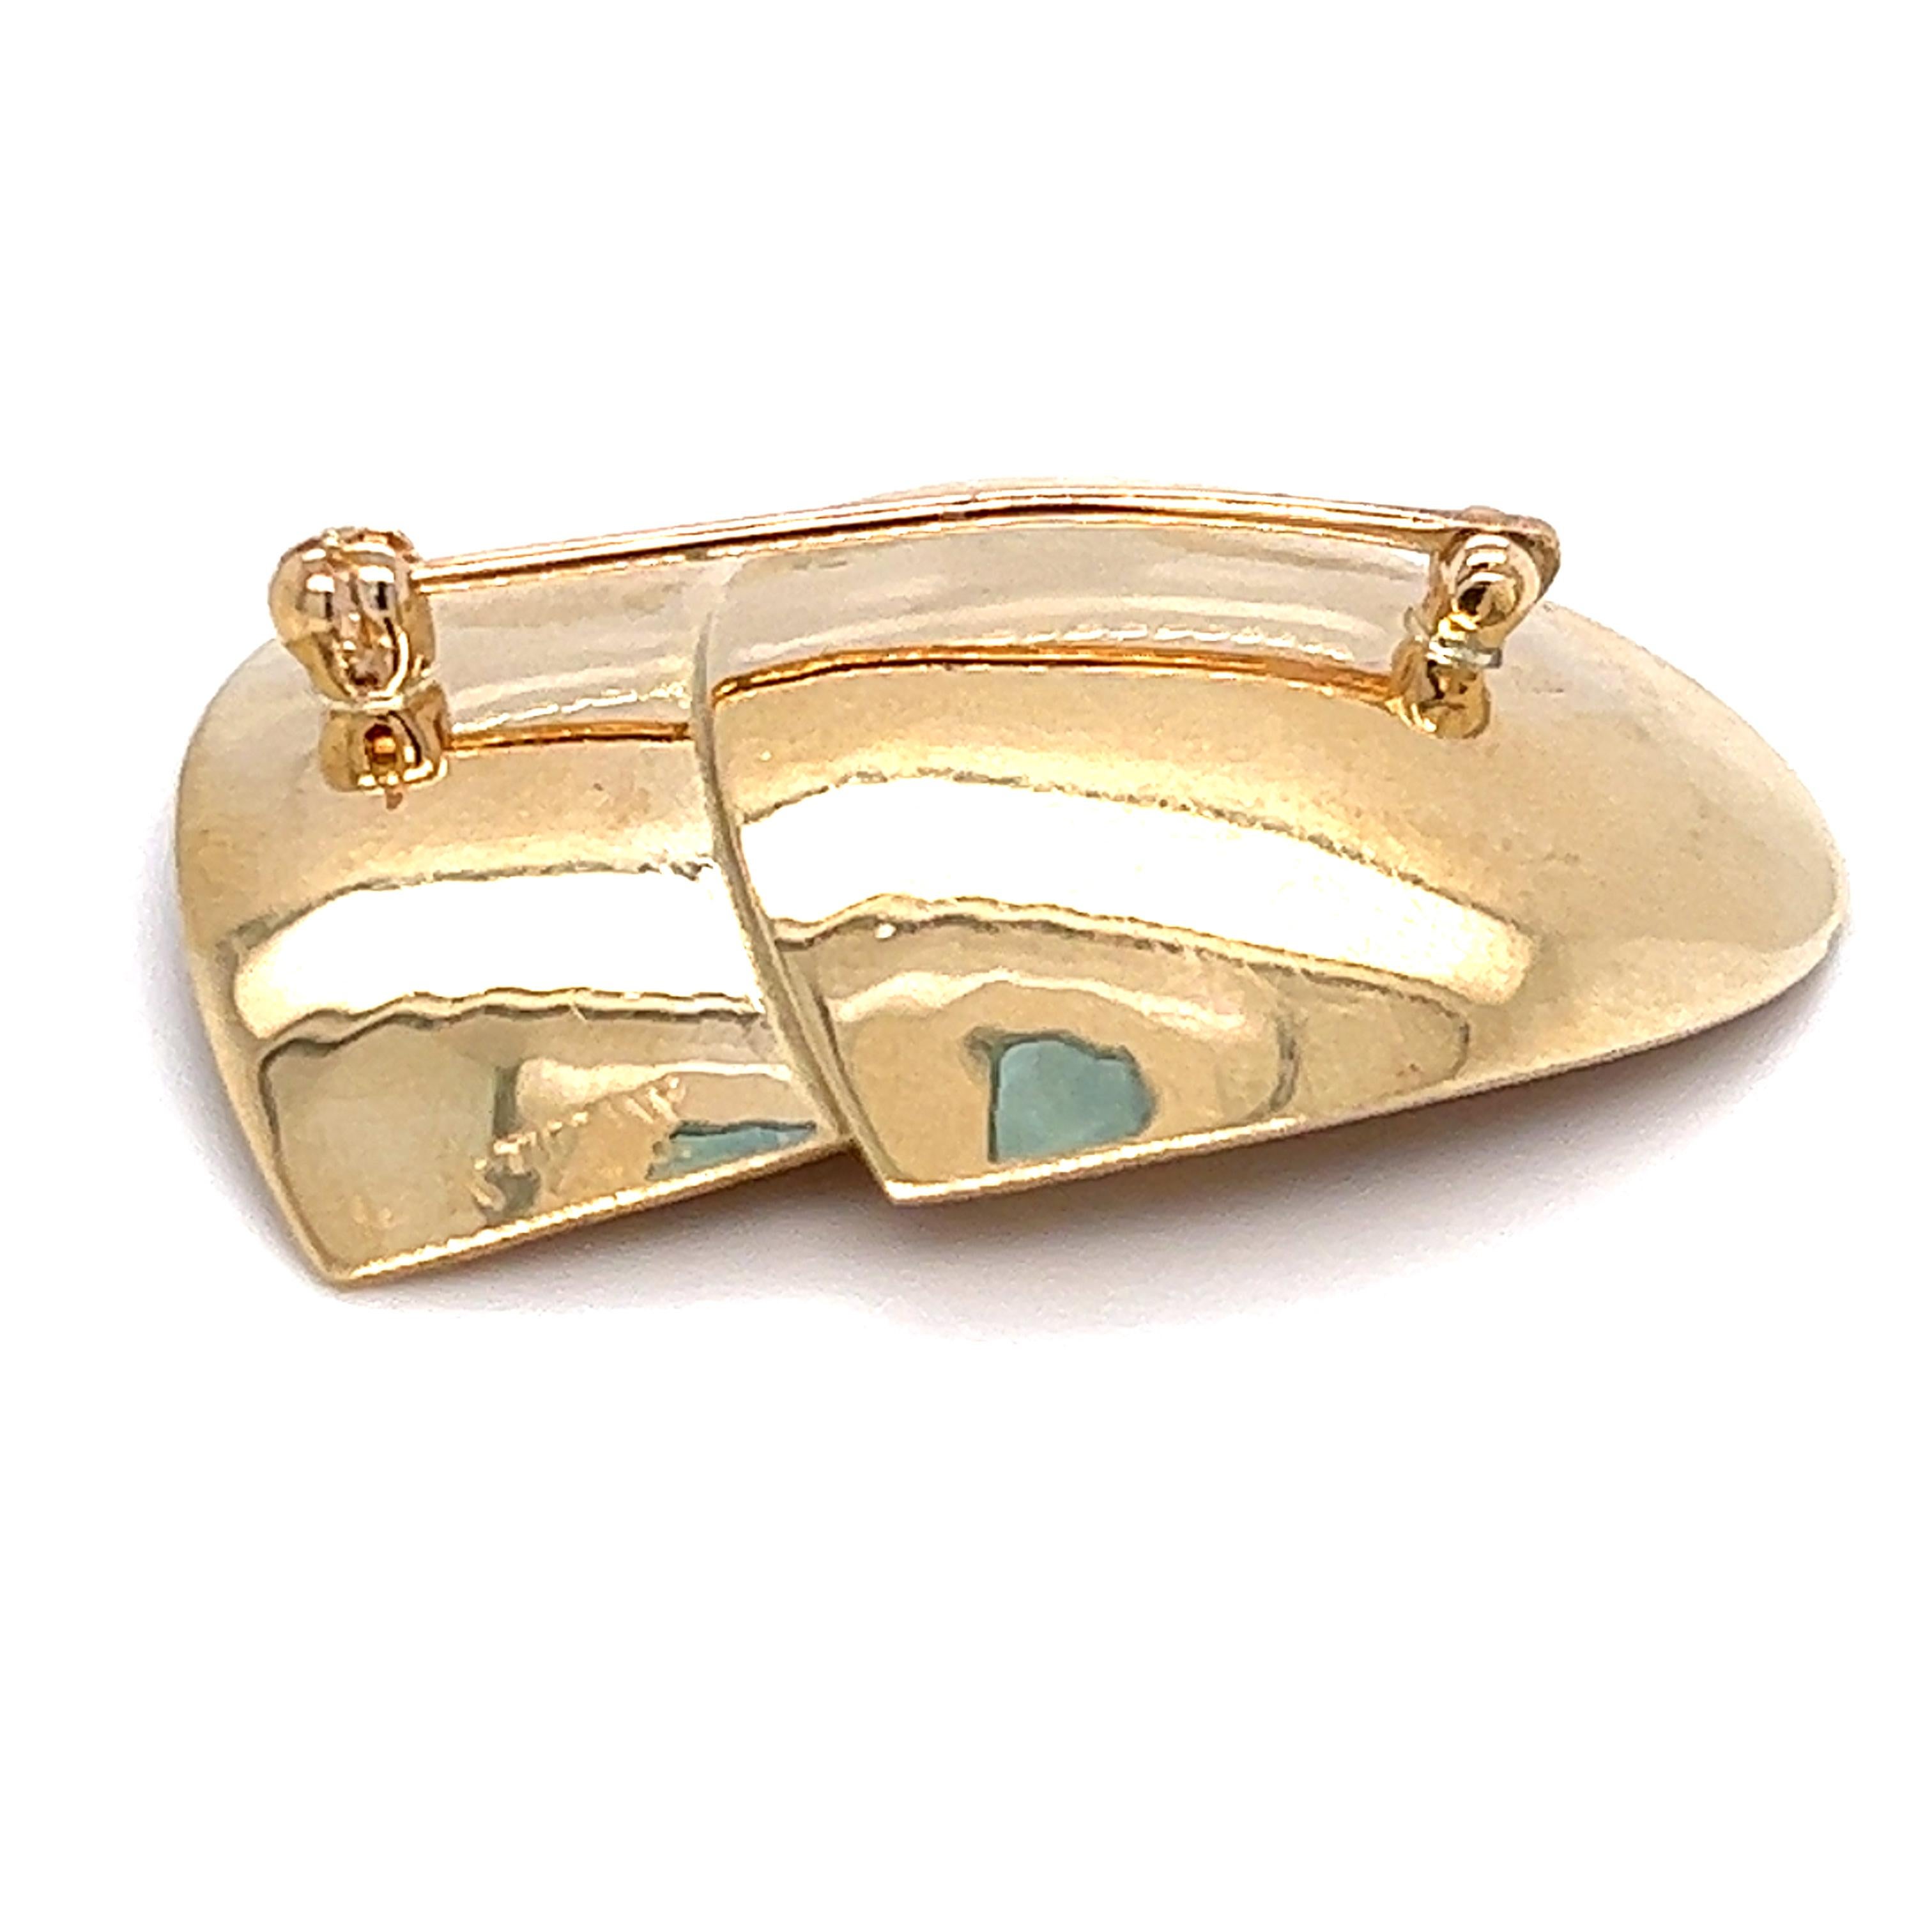 Brilliant Cut 1960s Tiffany & Co. Diamond Heart Pin in 14 Karat Gold